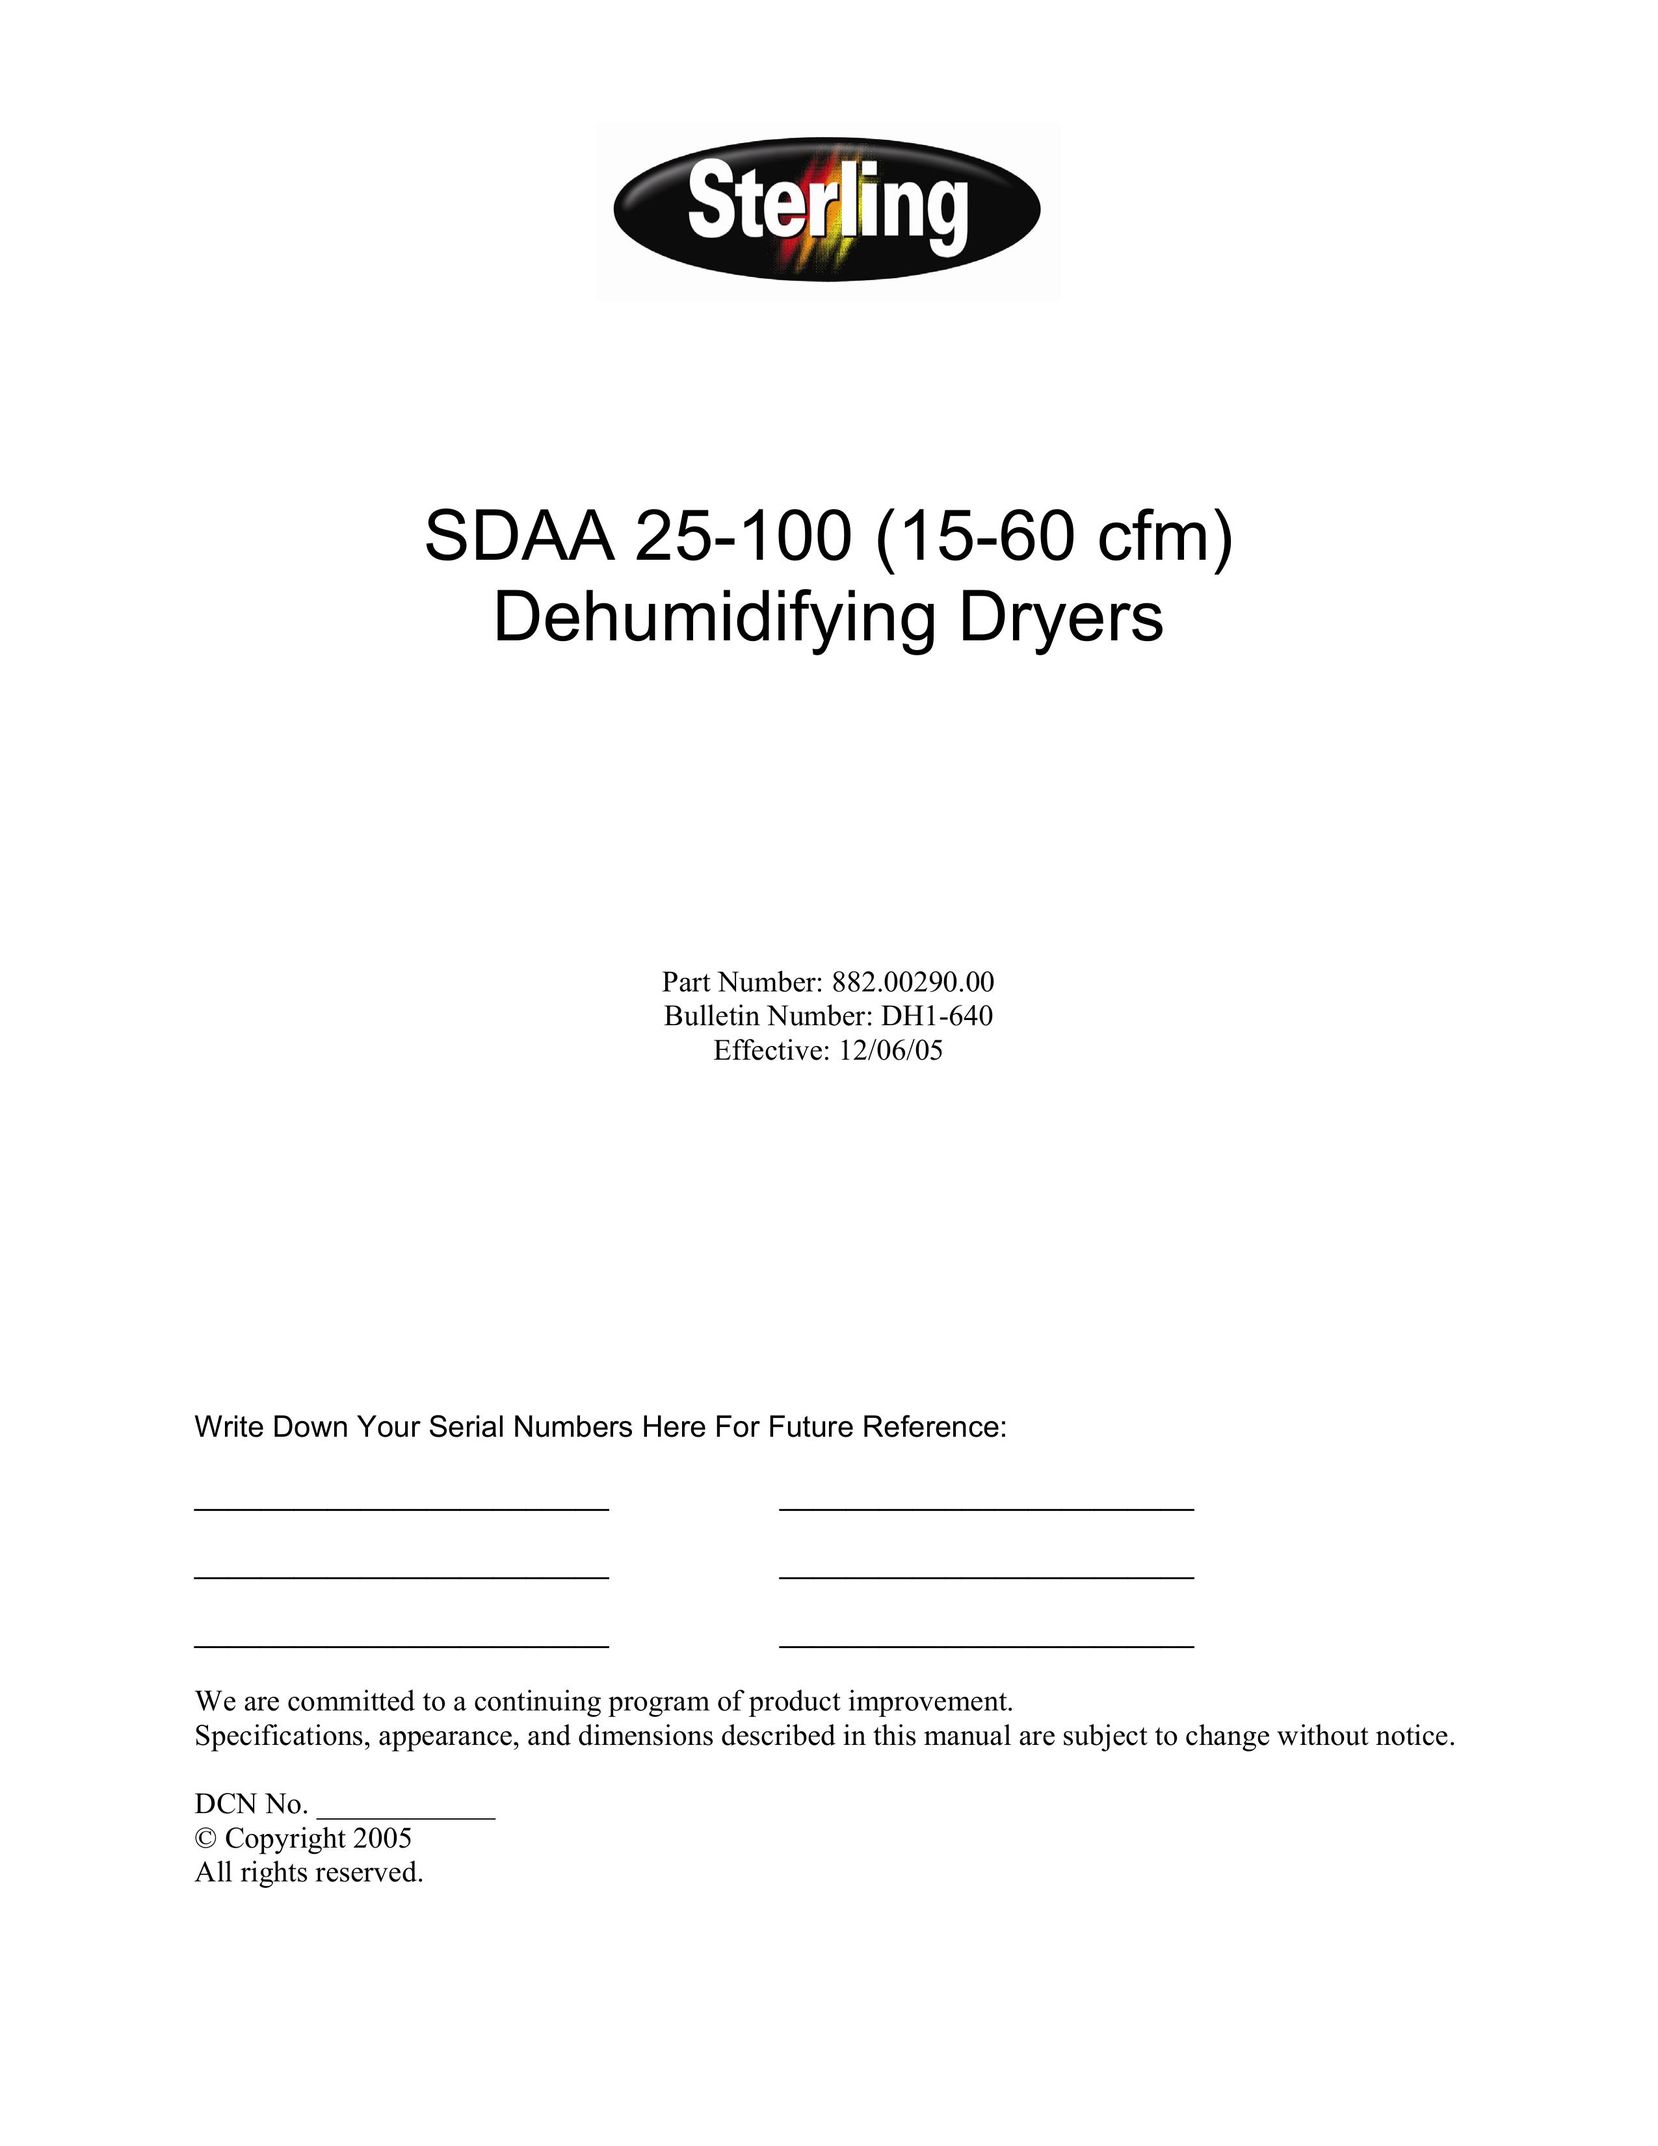 Sterling SDAA 25-100 Dehumidifier User Manual